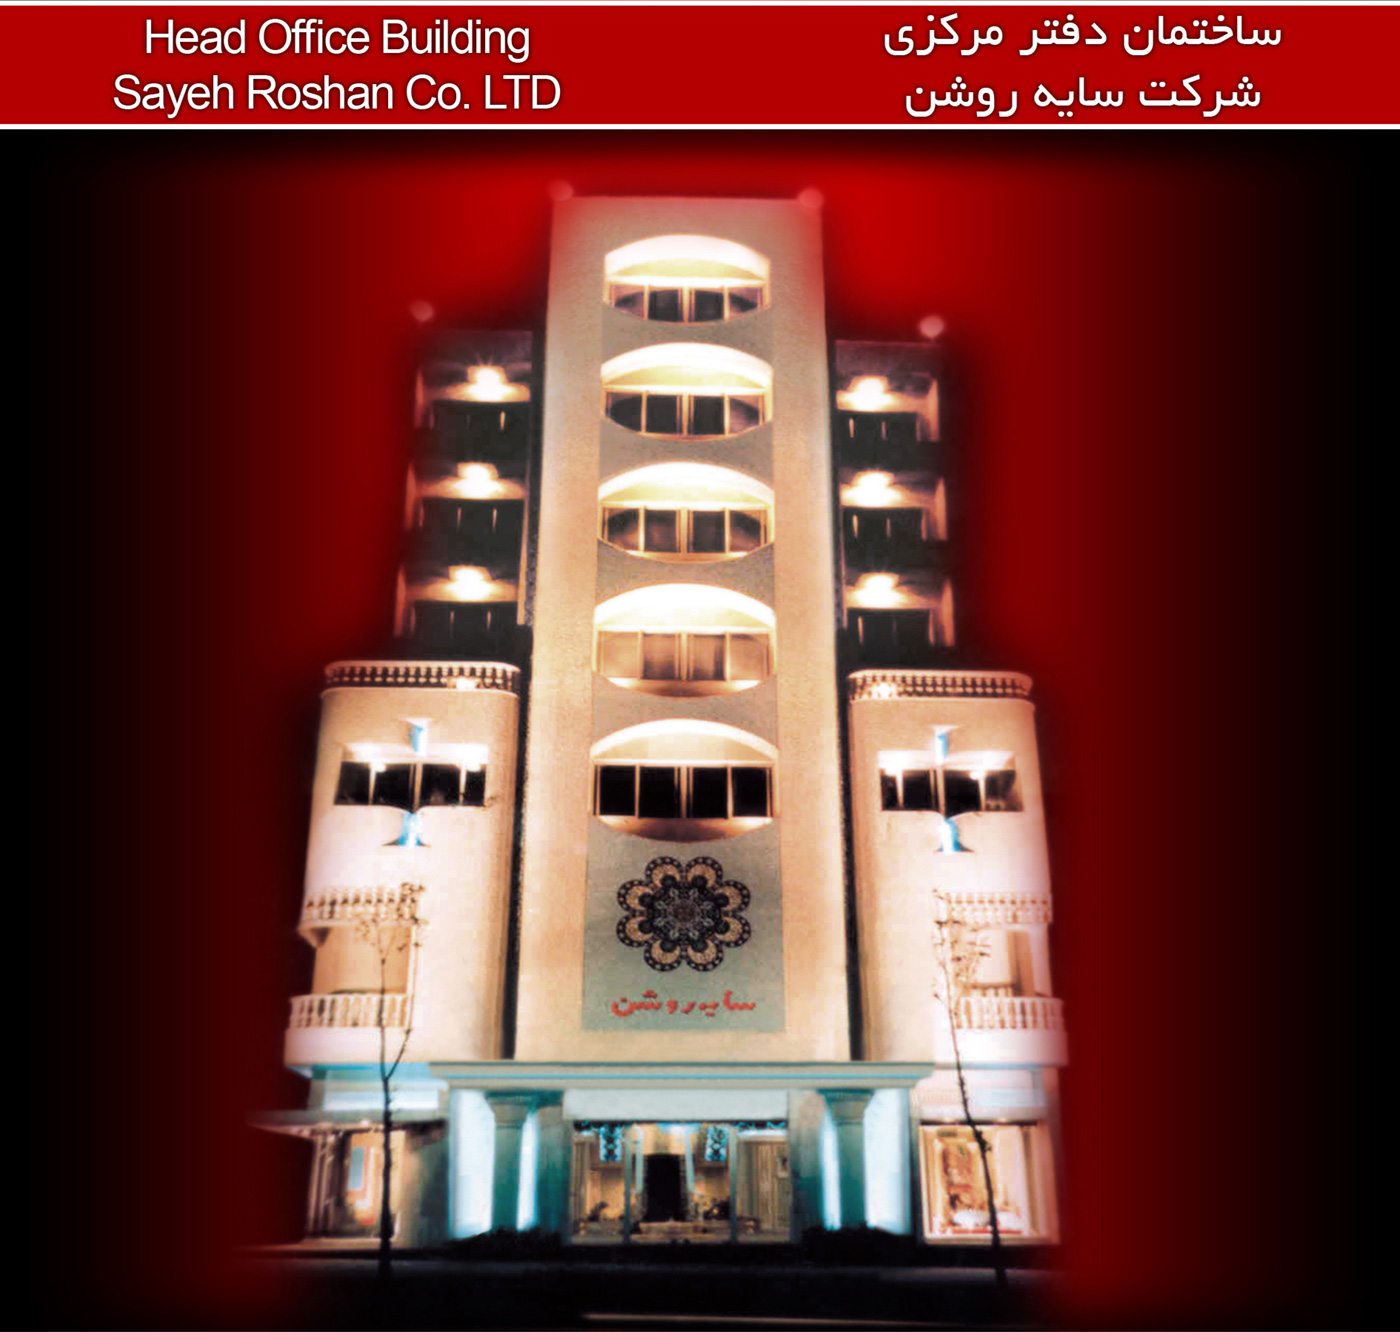 ساختمان سایه روشن | Sayeh Roshan Co. Ltd. Head Office Building